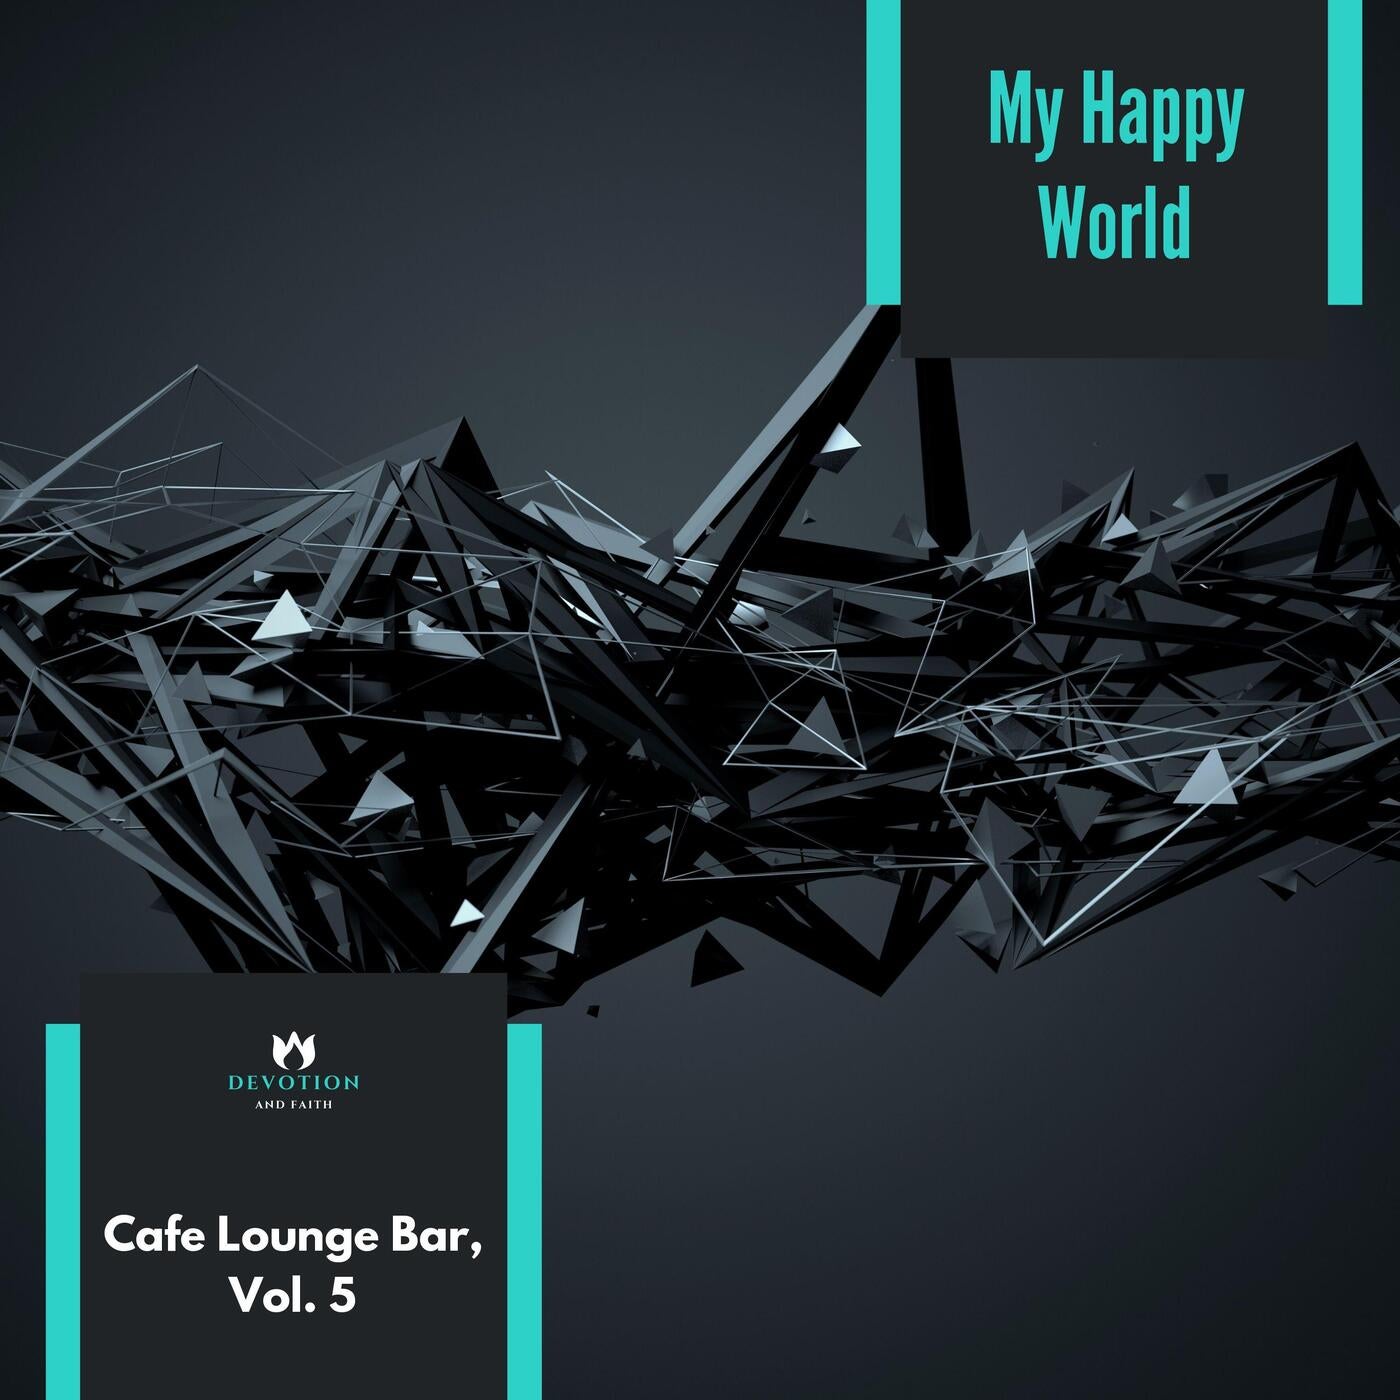 My Happy World - Cafe Lounge Bar, Vol. 5